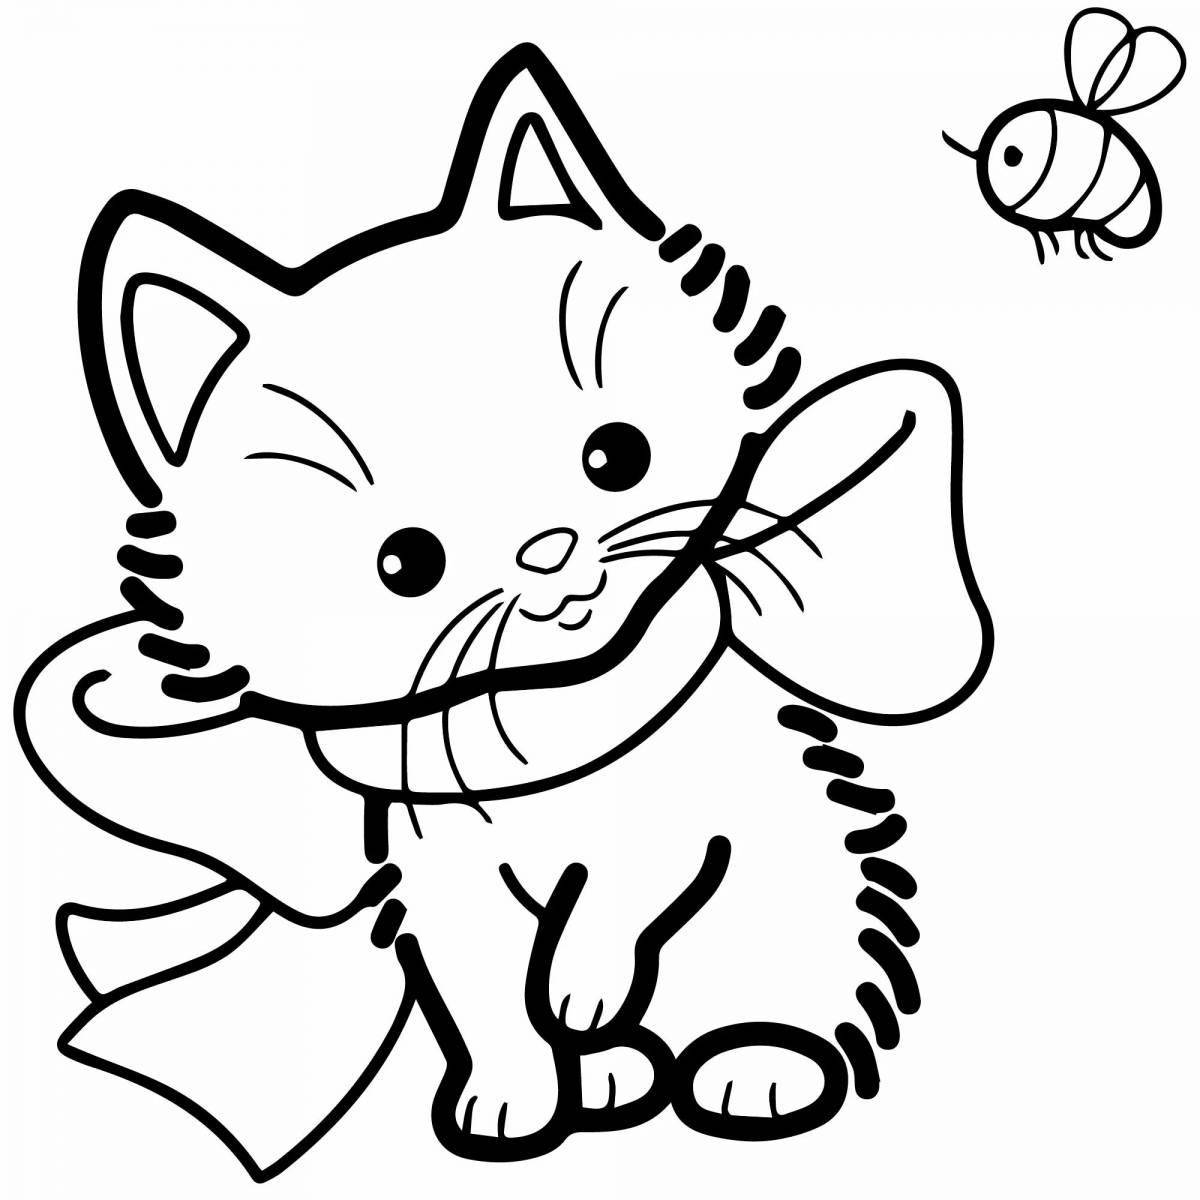 Drawing of a fluffy kitten for children